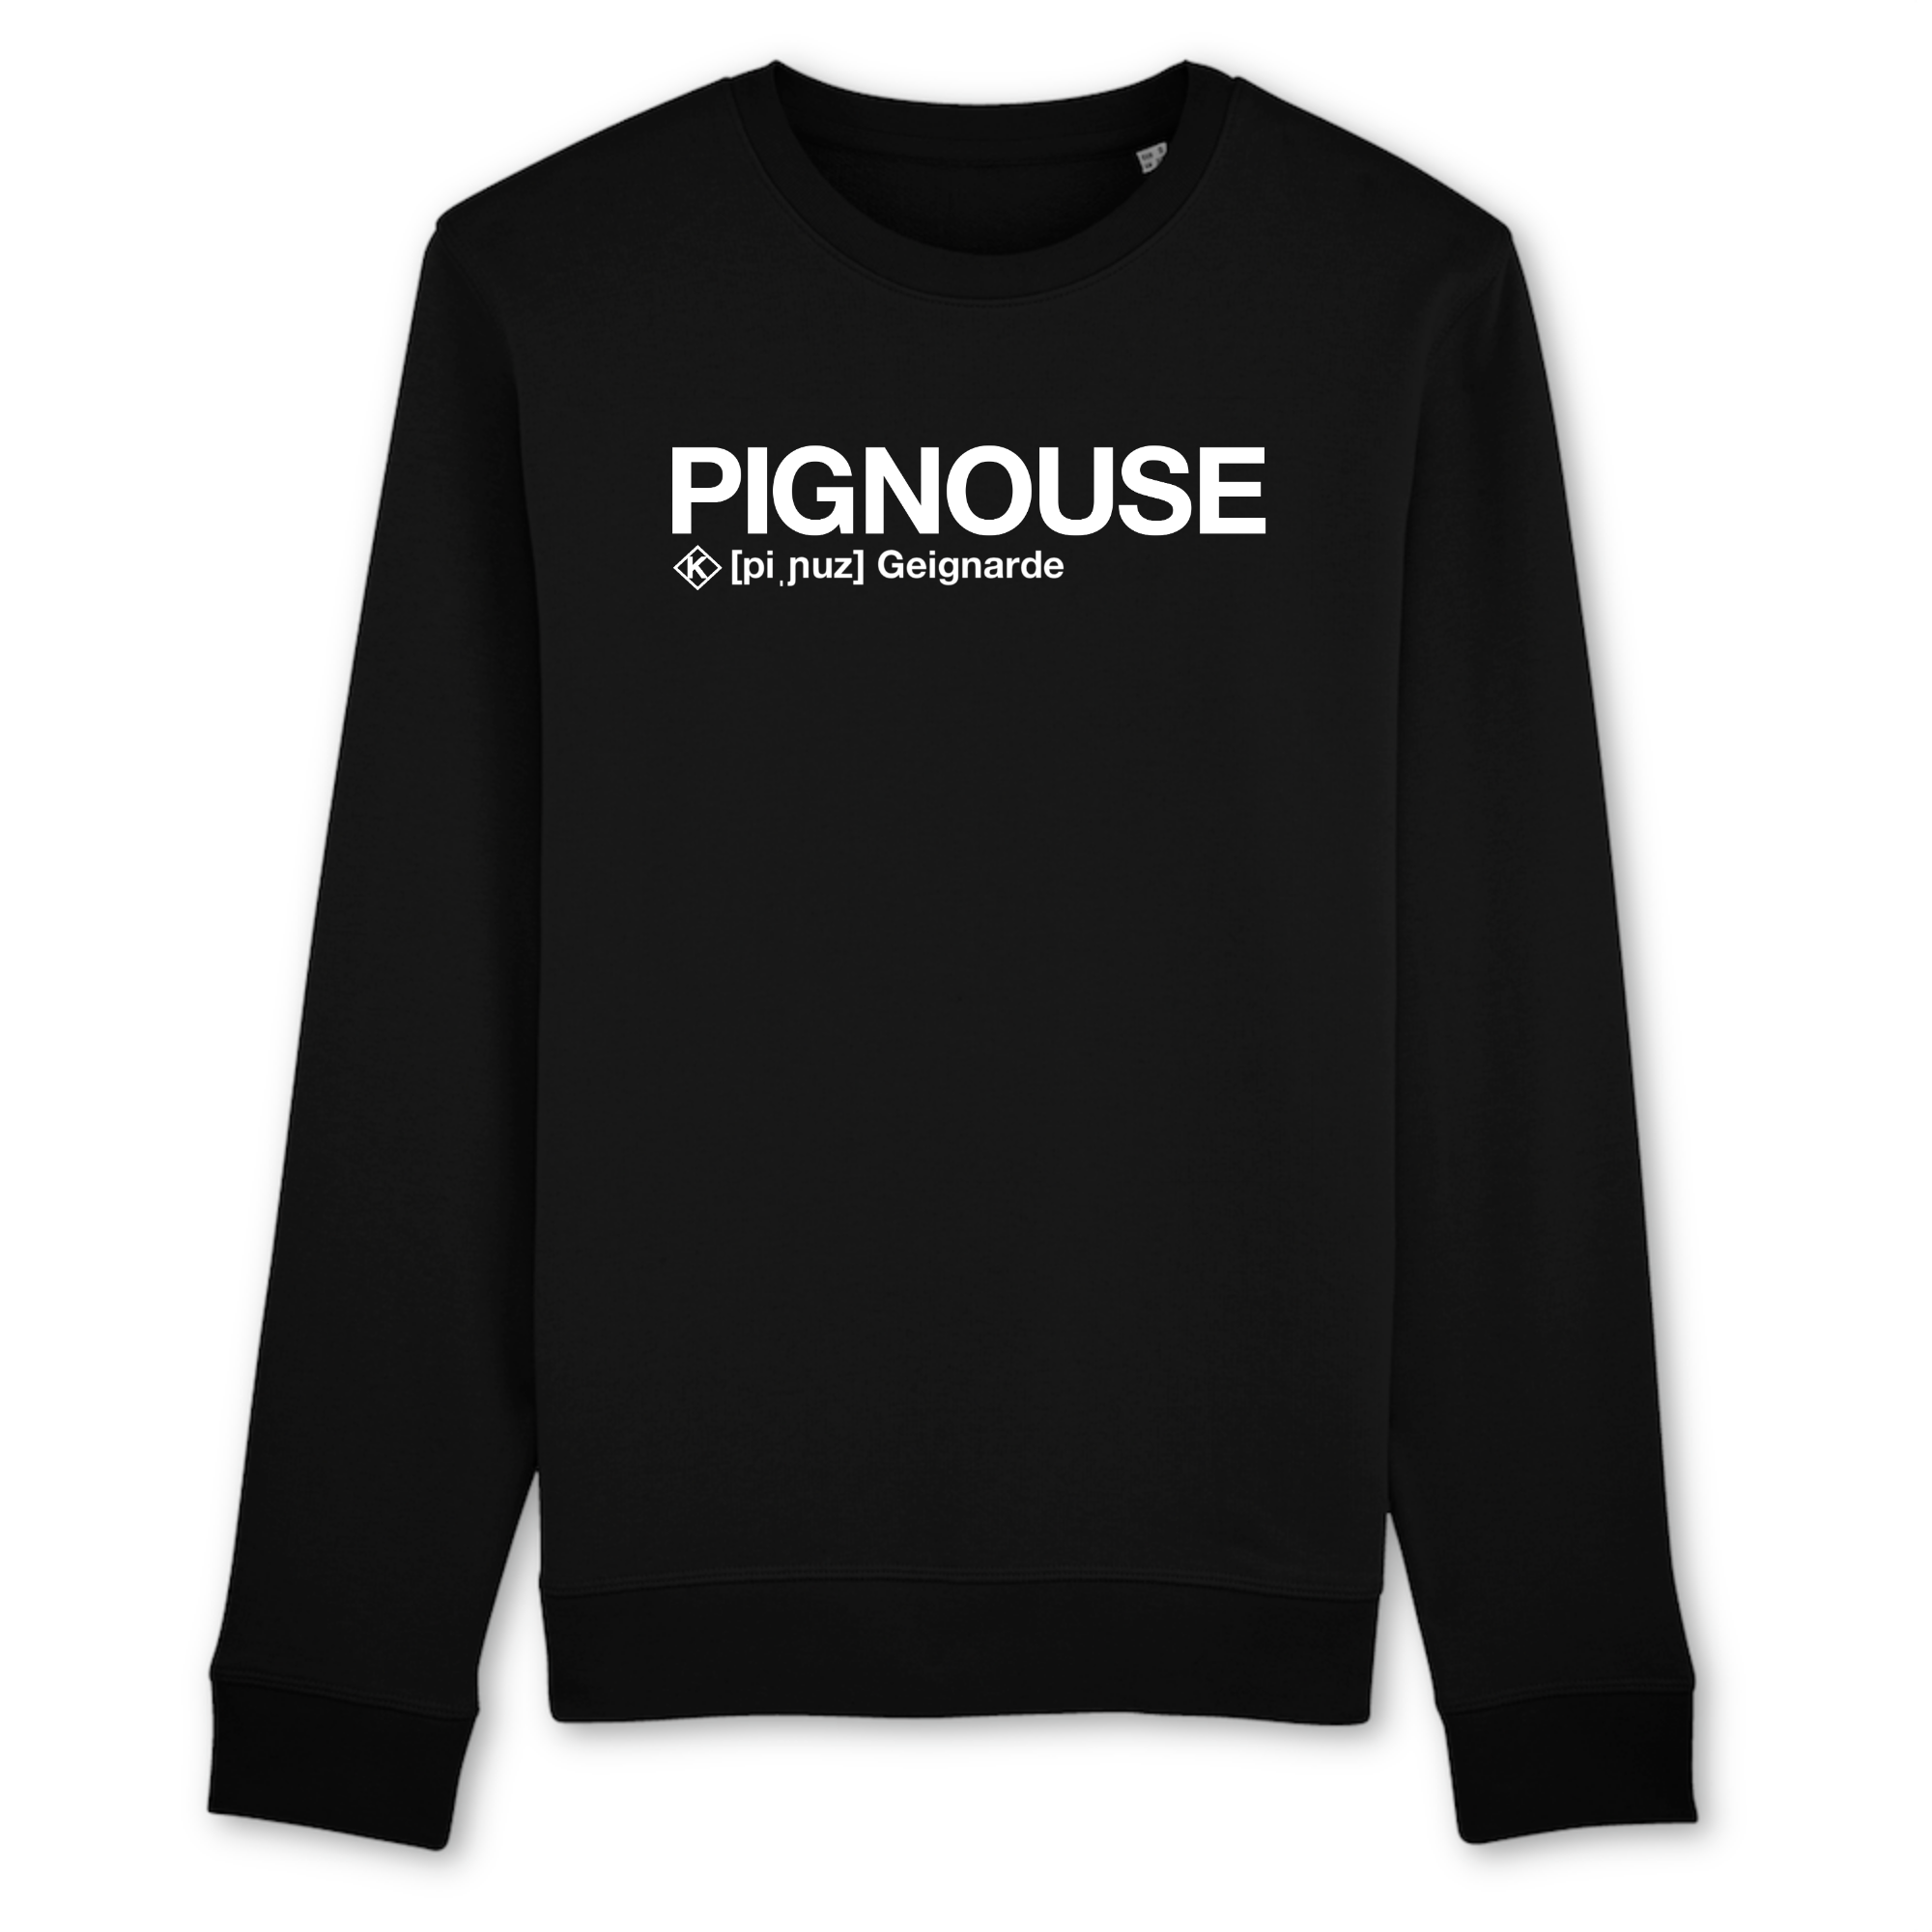 Pignouse Sweatshirt (Geignarde)